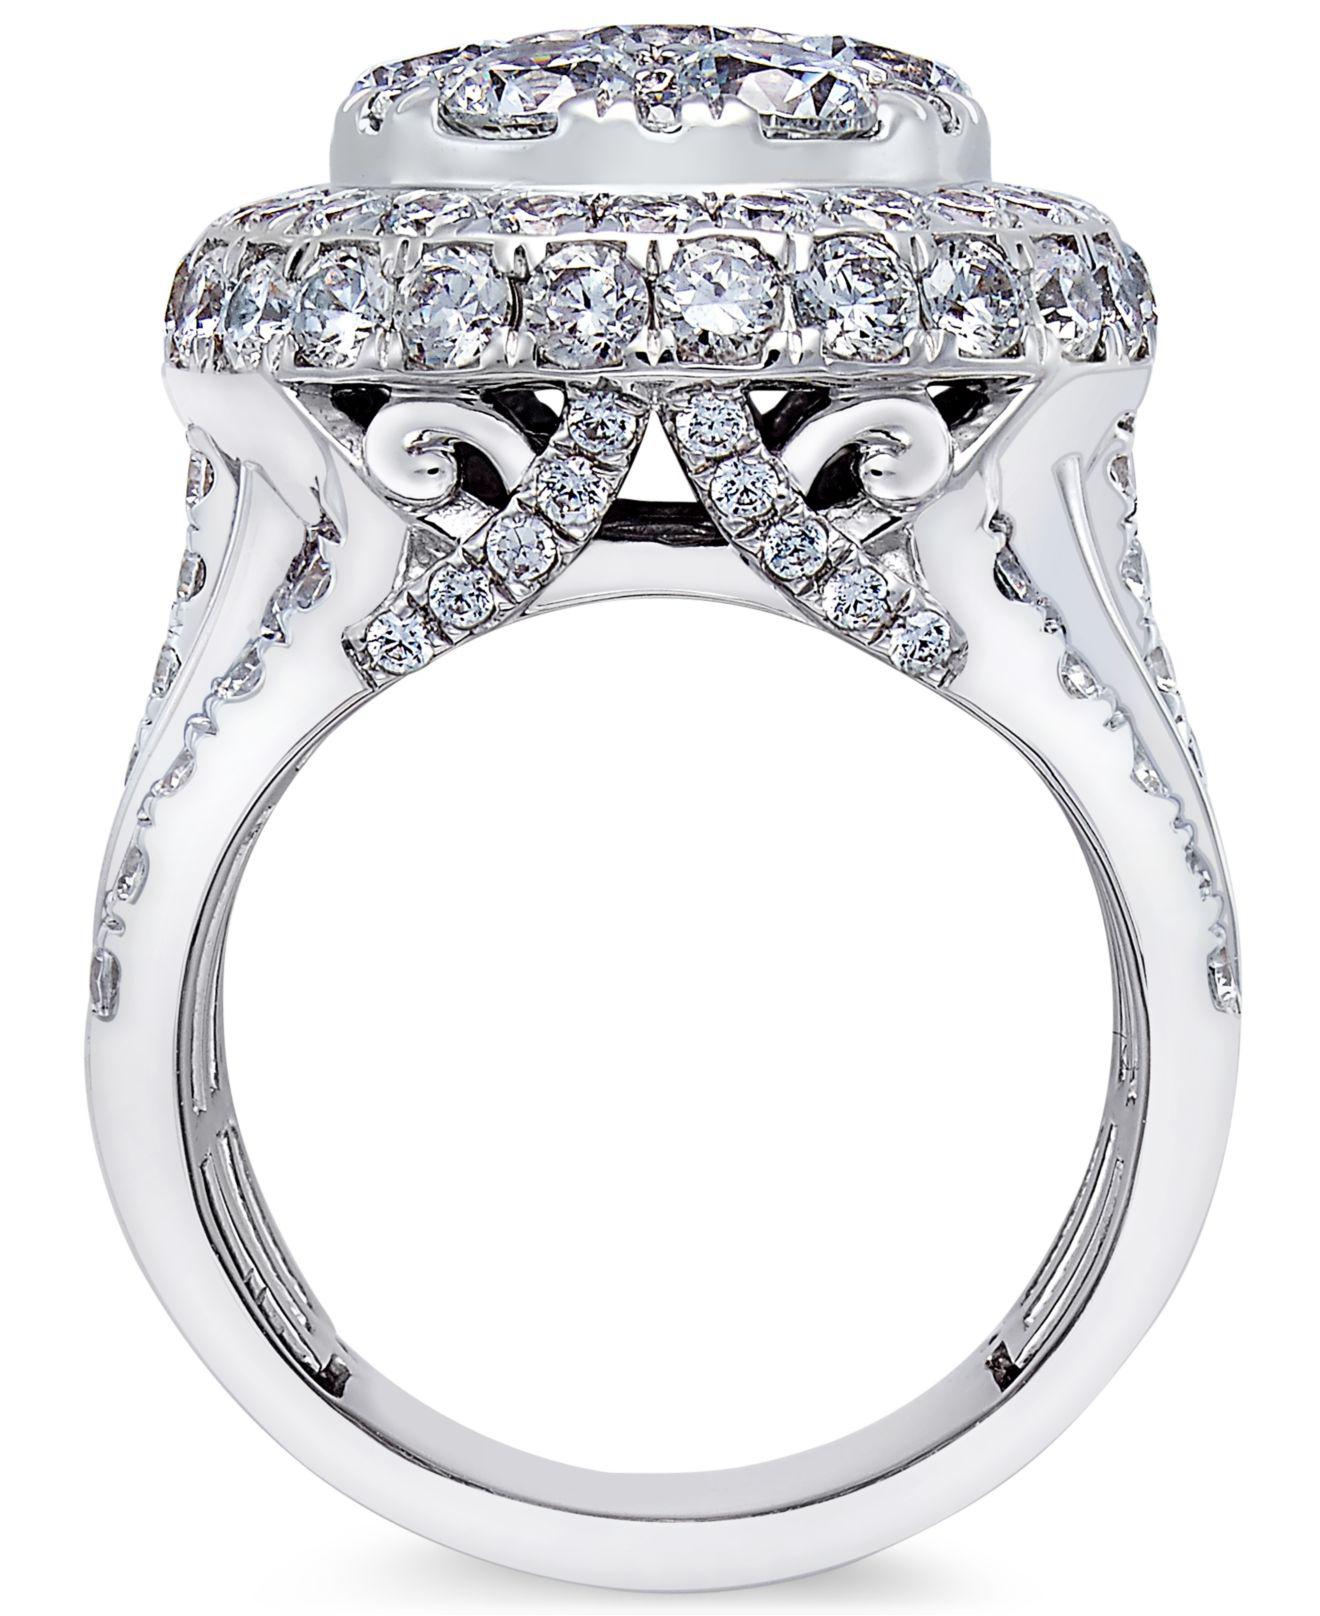 Large diamond engagement rings London